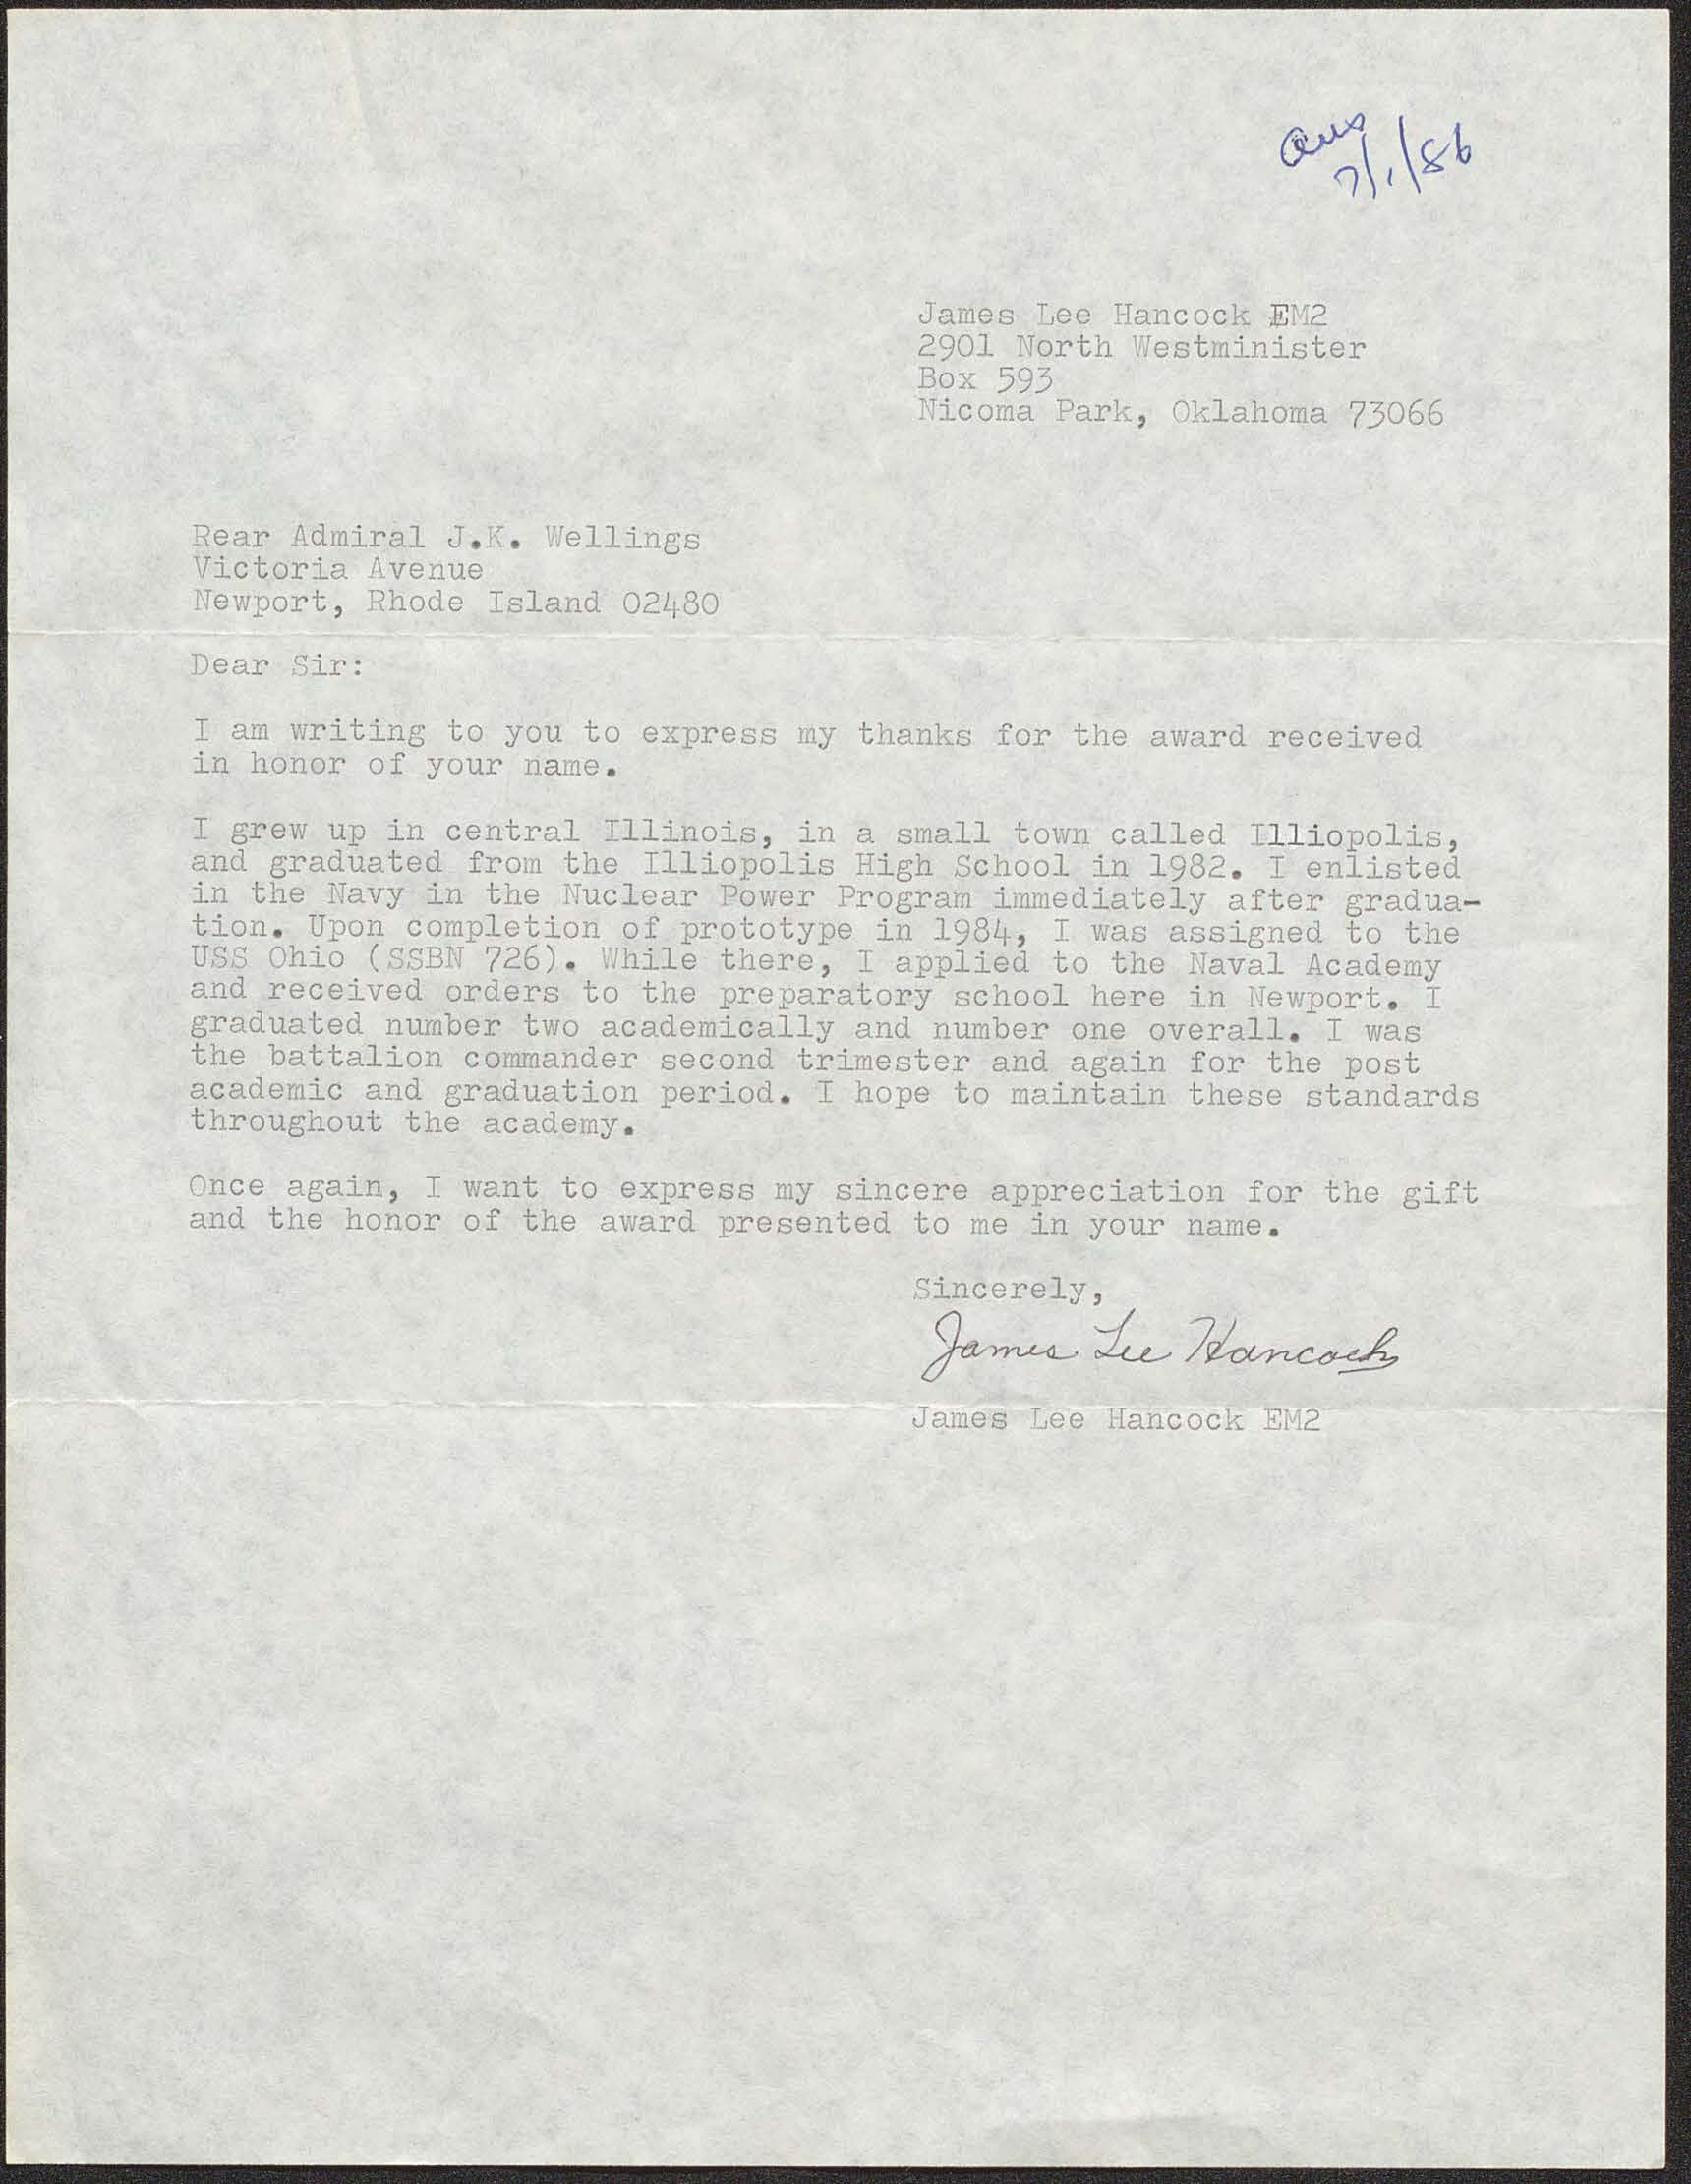 Letter from James Lee Hancock to RADM Joseph H. Wellings